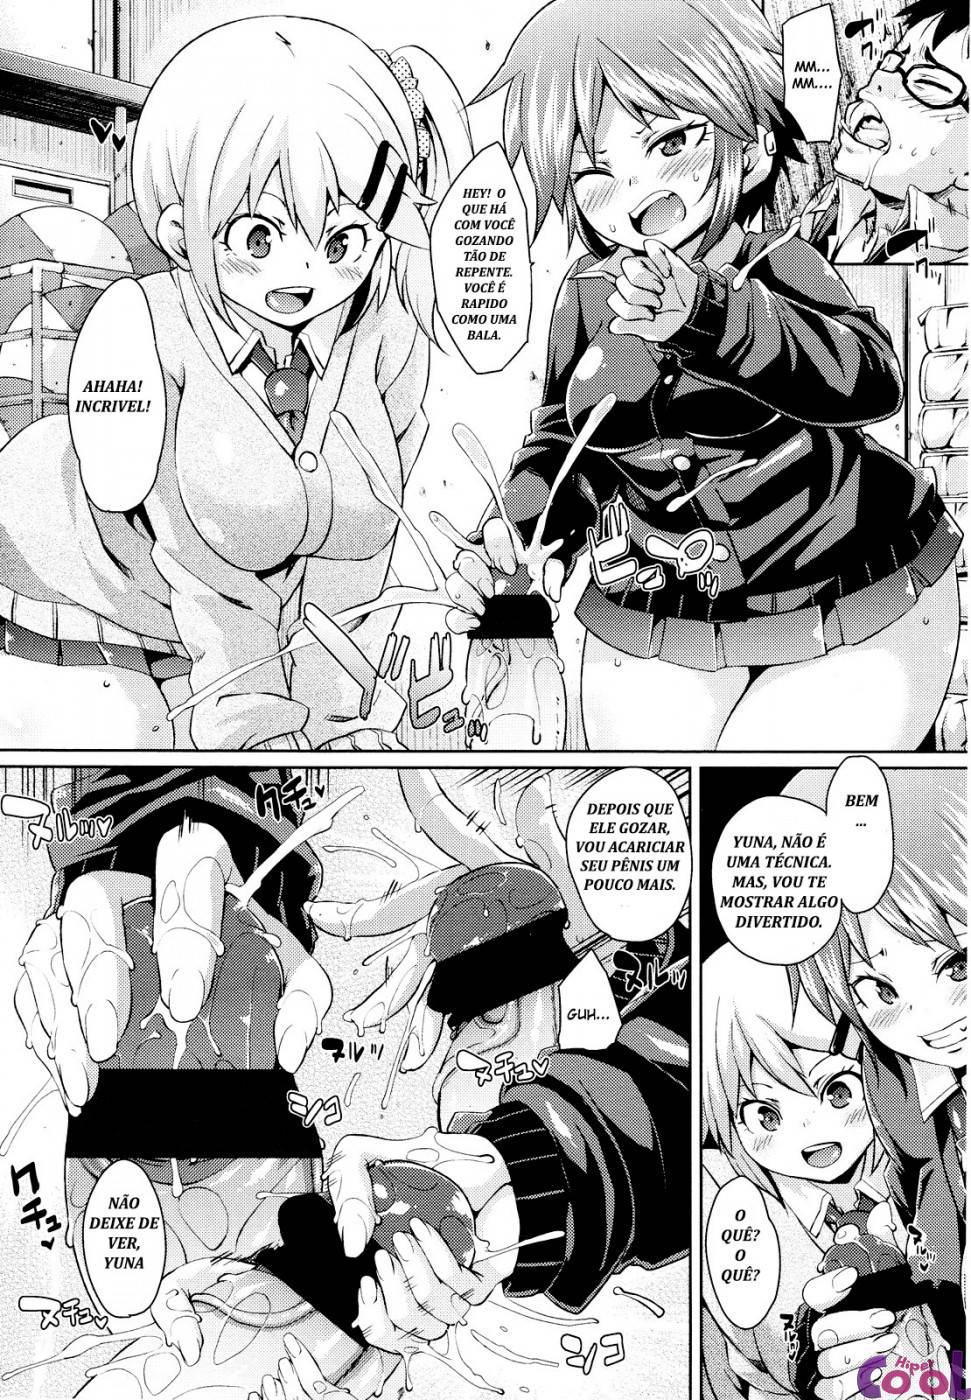 sensei-urusai-w-chapter-01-page-09.jpg